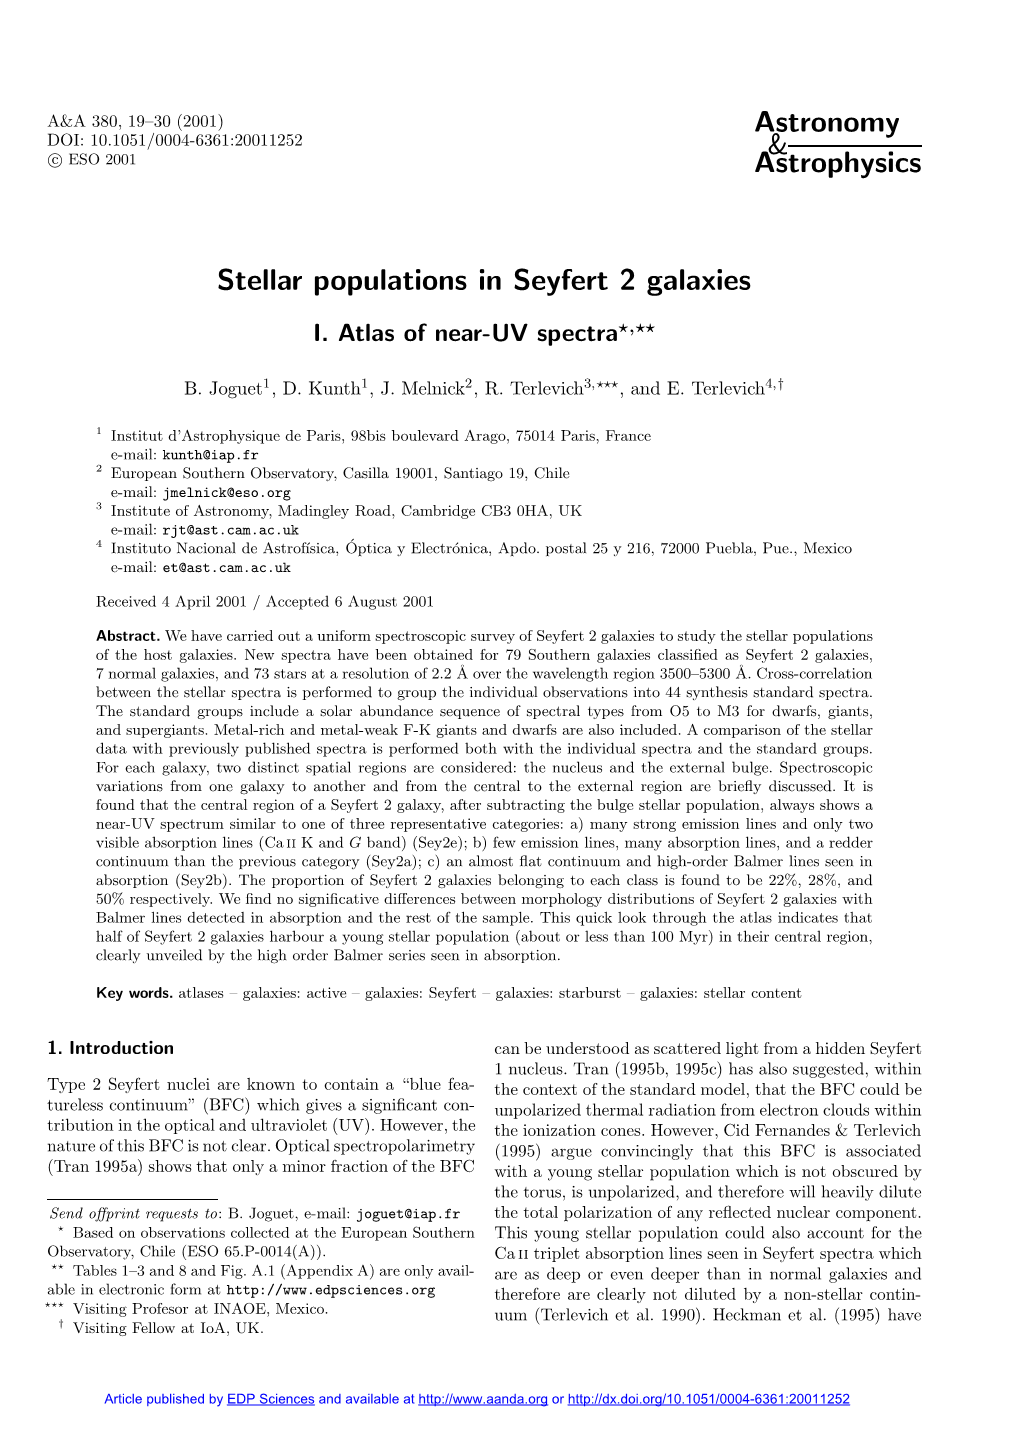 Stellar Populations in Seyfert 2 Galaxies